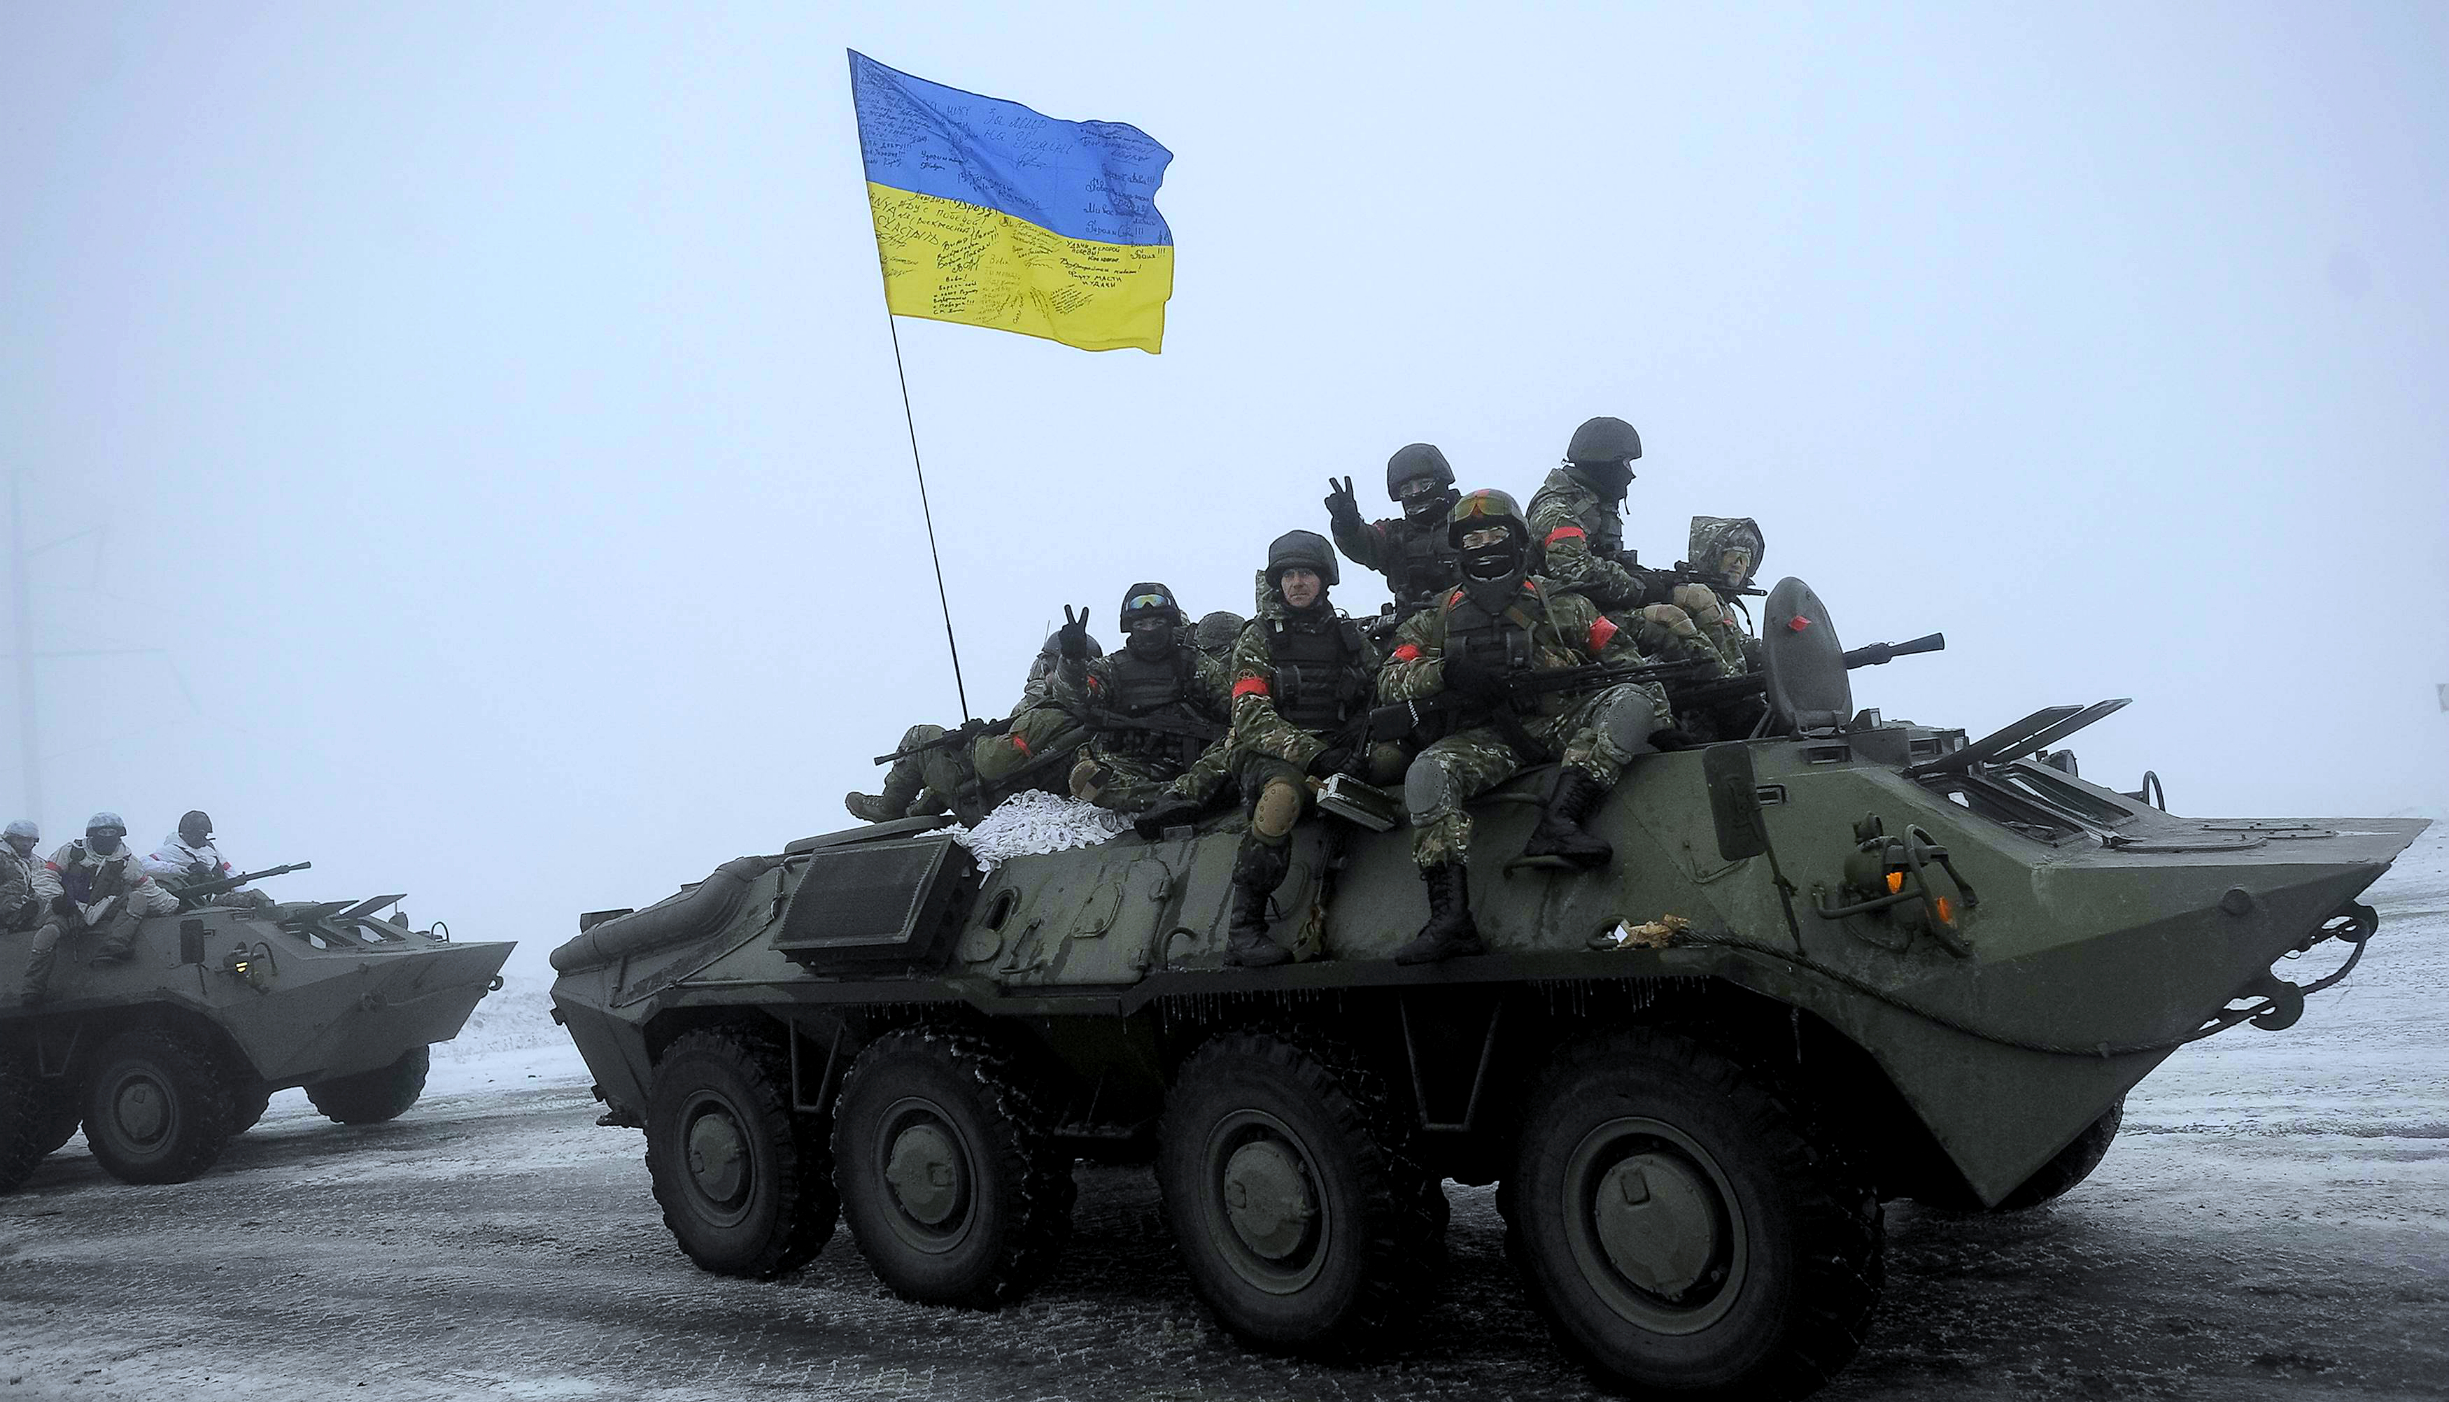 ВСУ штурмуют Донецкий аэропорт, наступая на армию ДНР танками и артиллерией